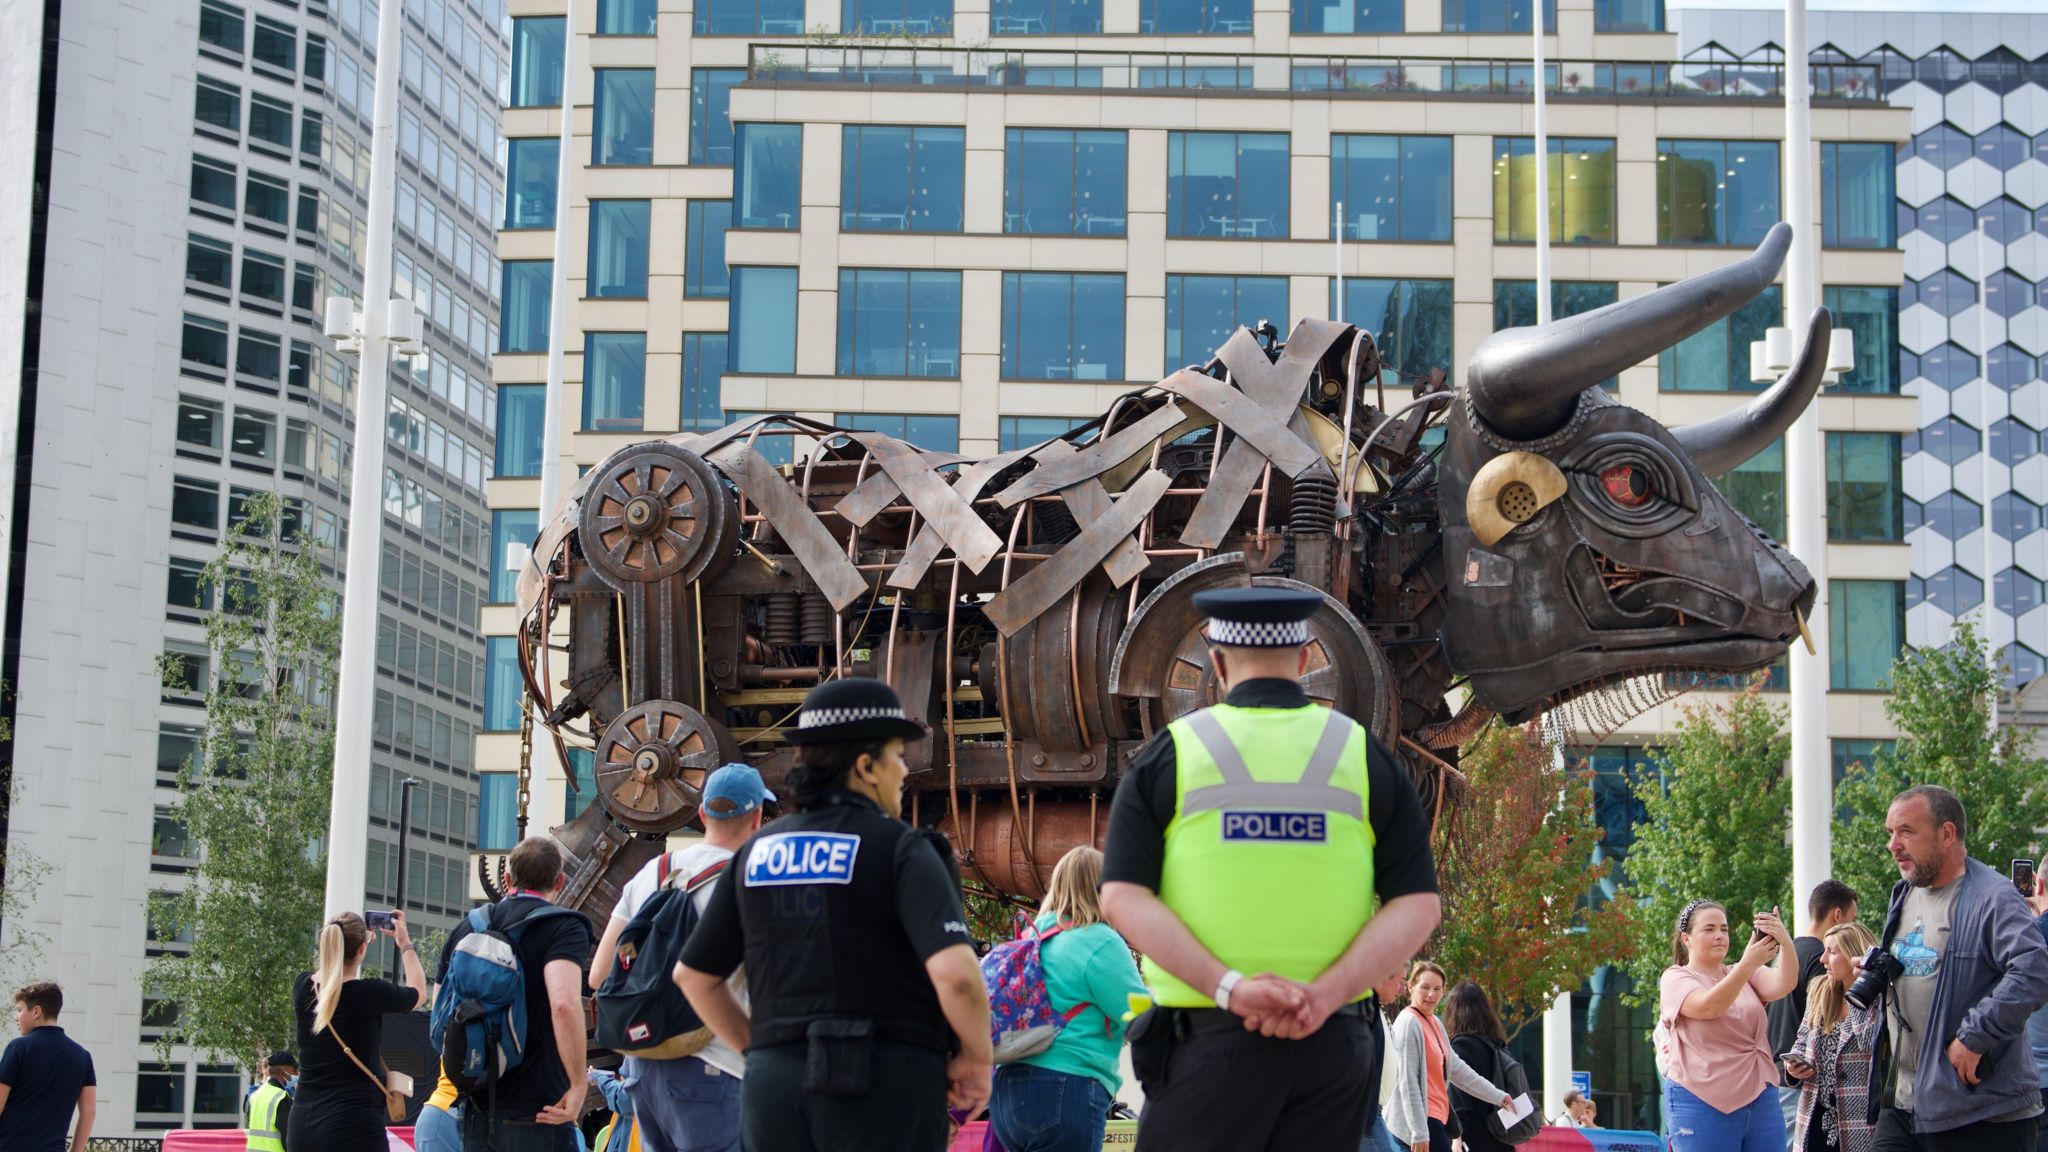 The Raging Bull in Birmingham